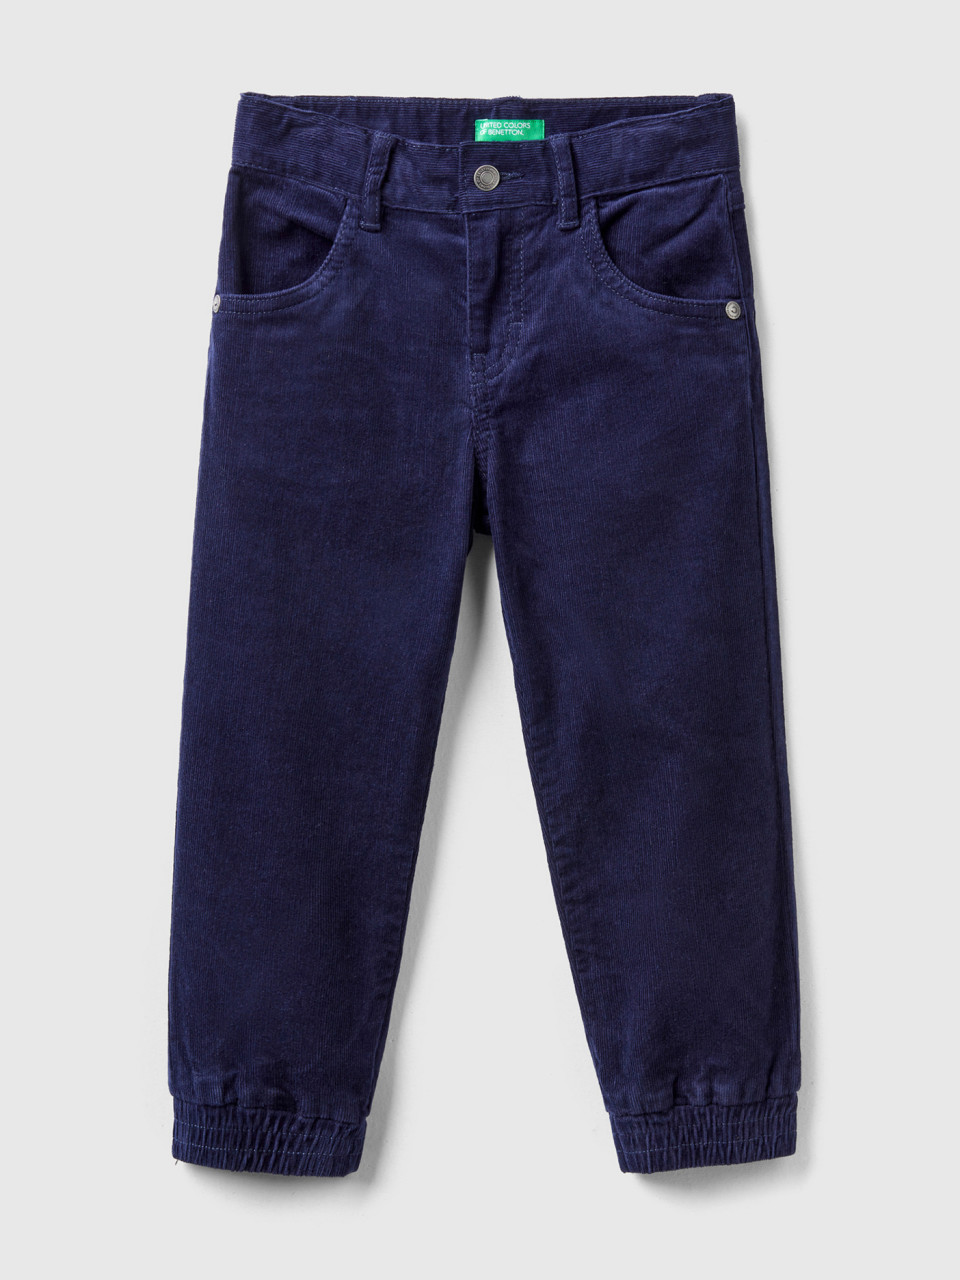 Benetton, Stretch Corduroy Trousers, Dark Blue, Kids